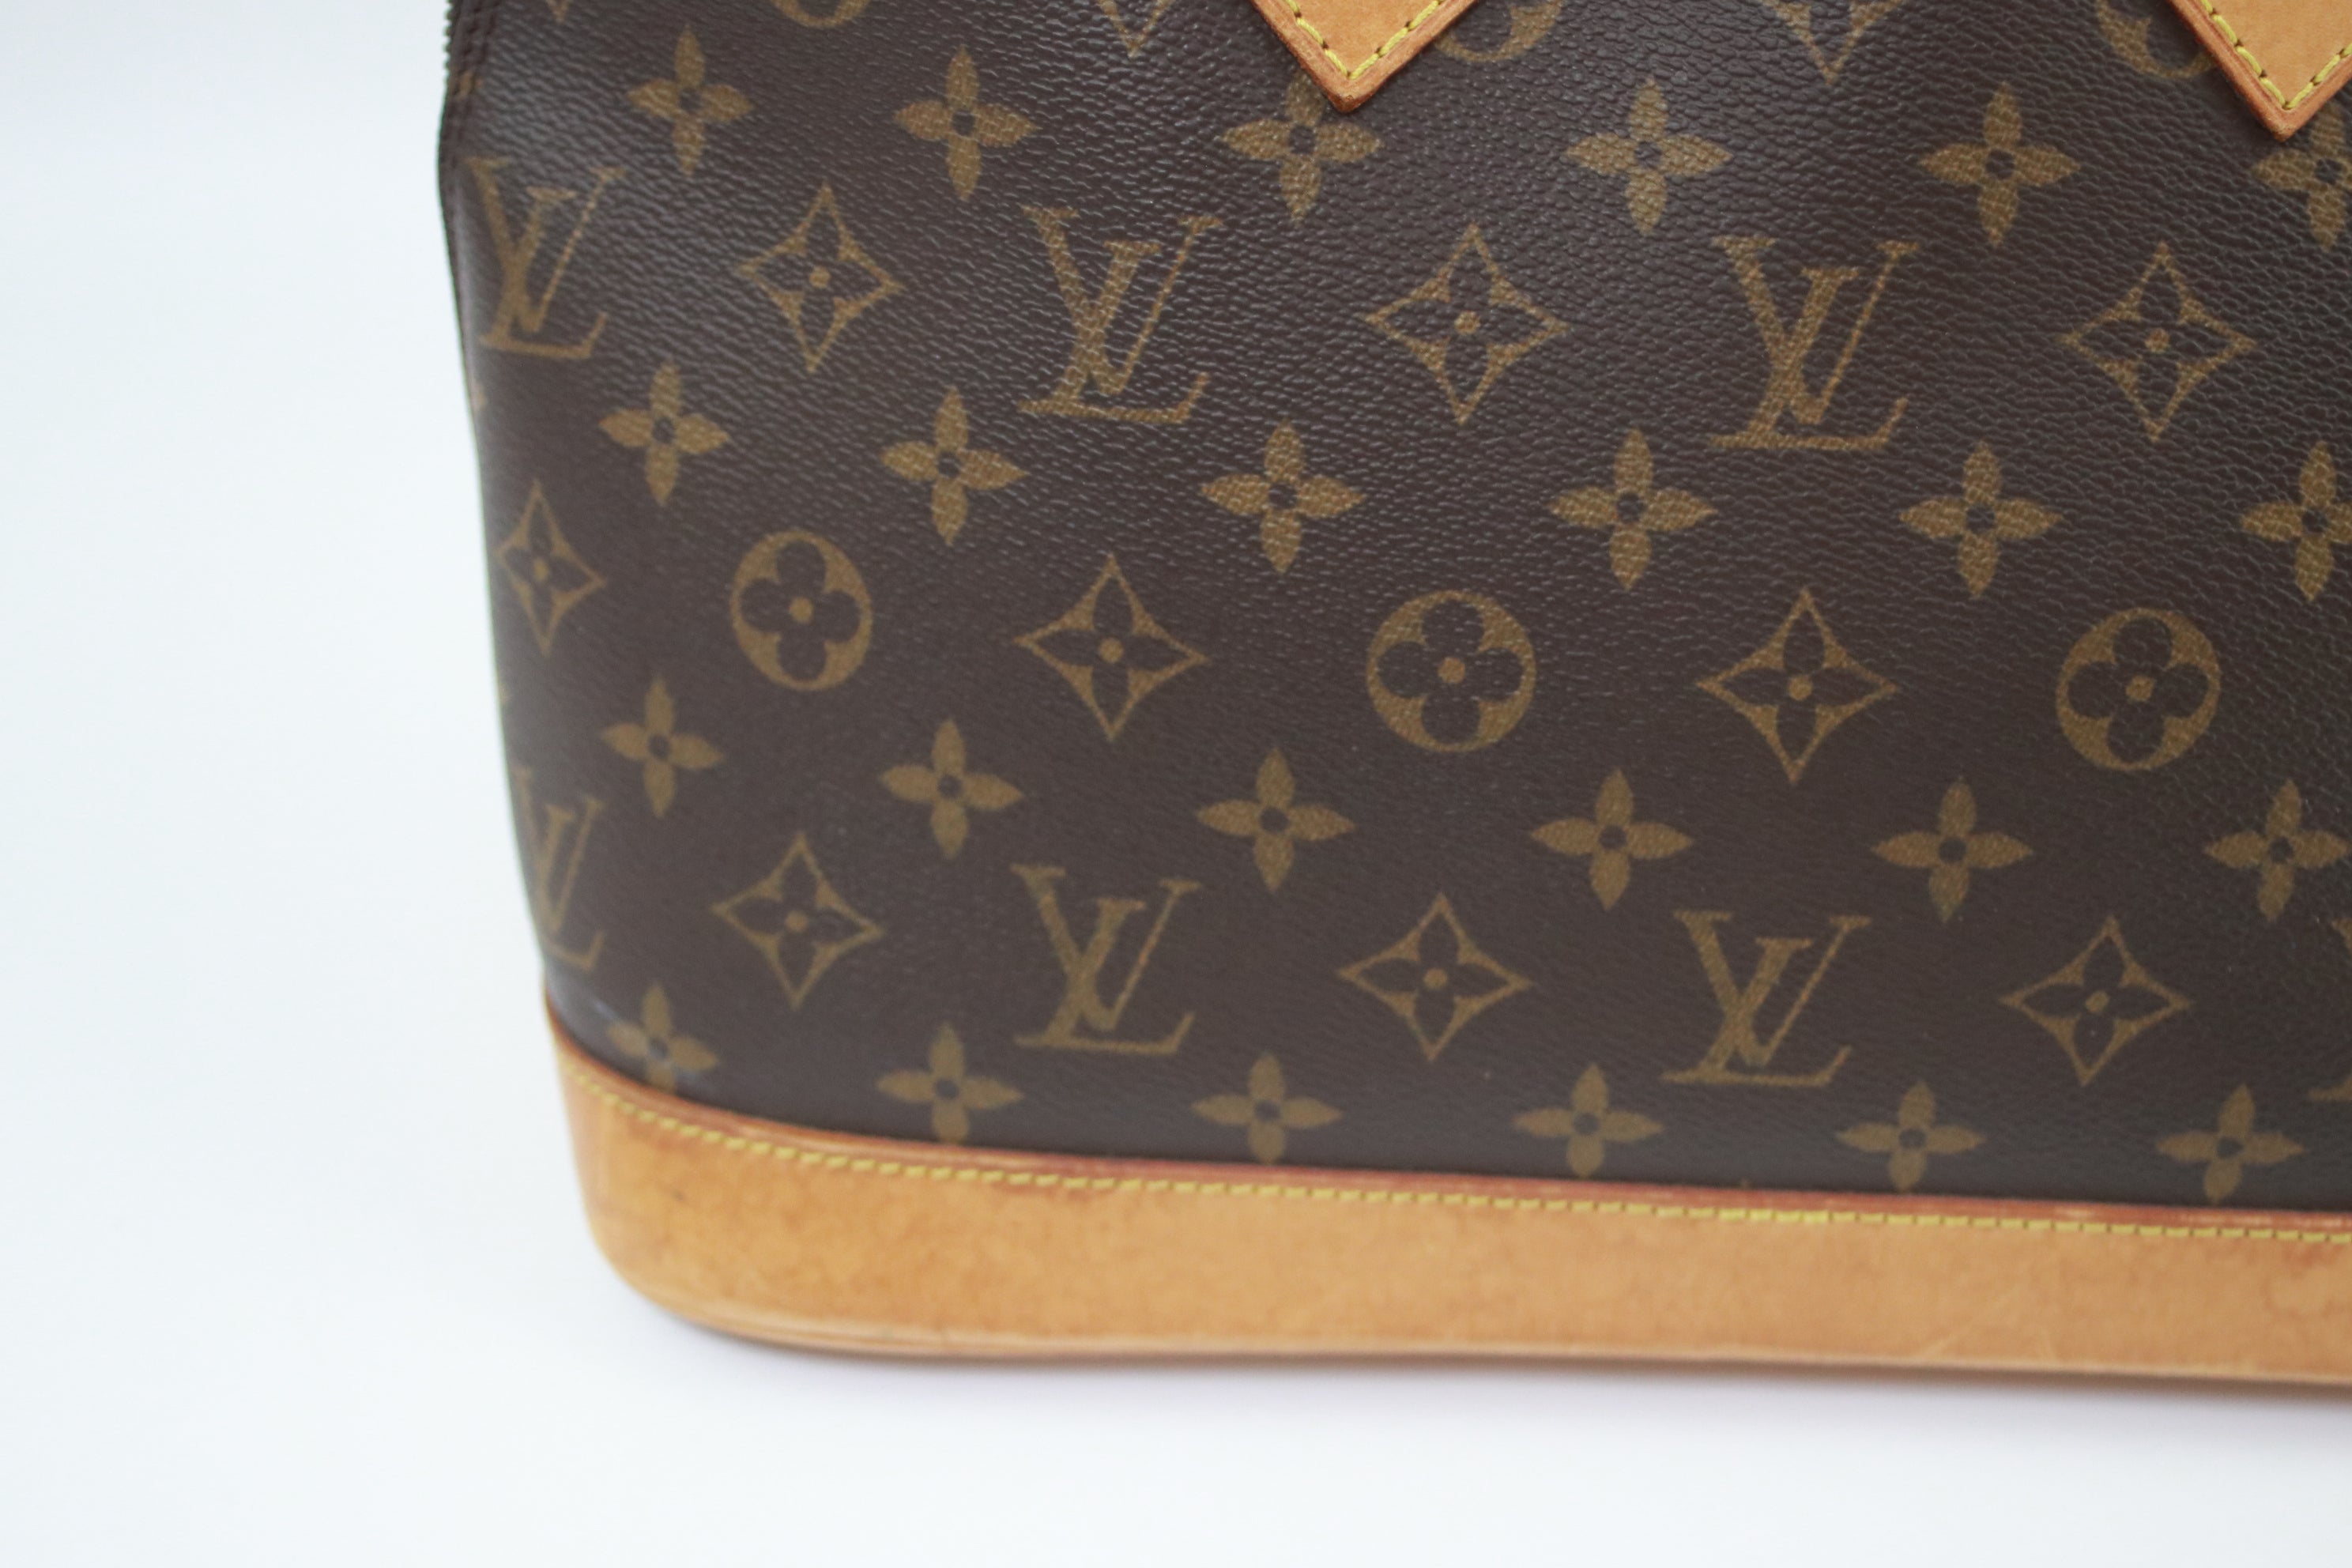 Louis Vuitton Alma PM Handbag Used (6809)